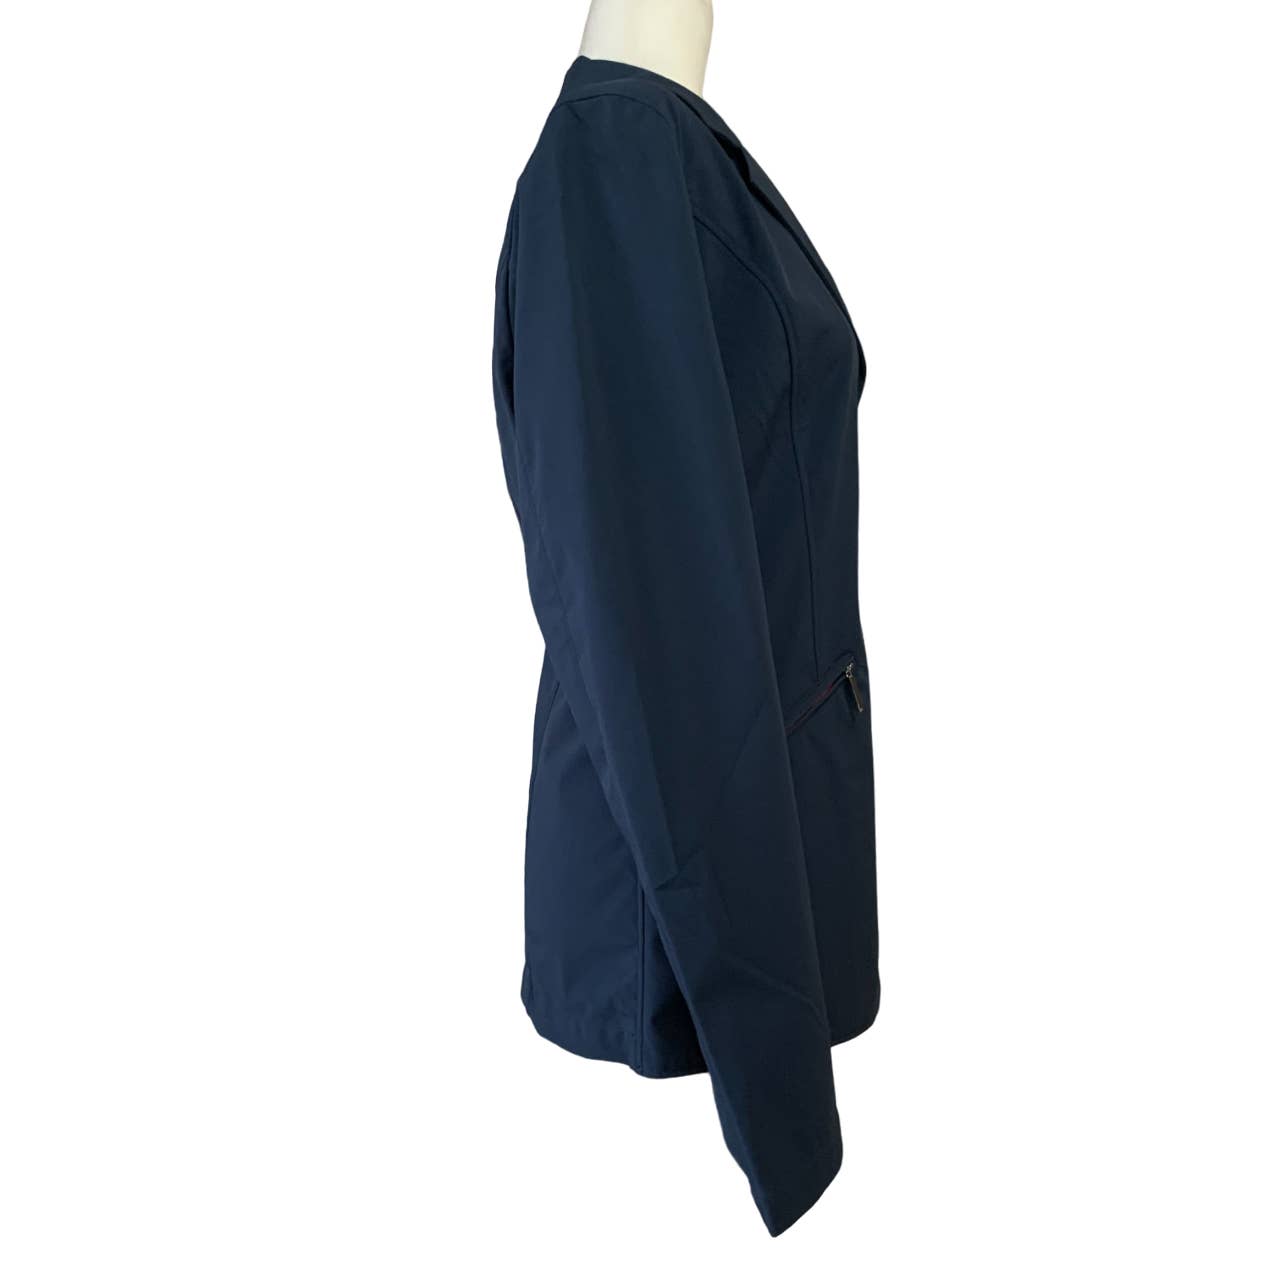 Horseware Classic Show Coat in Navy - Woman's XL